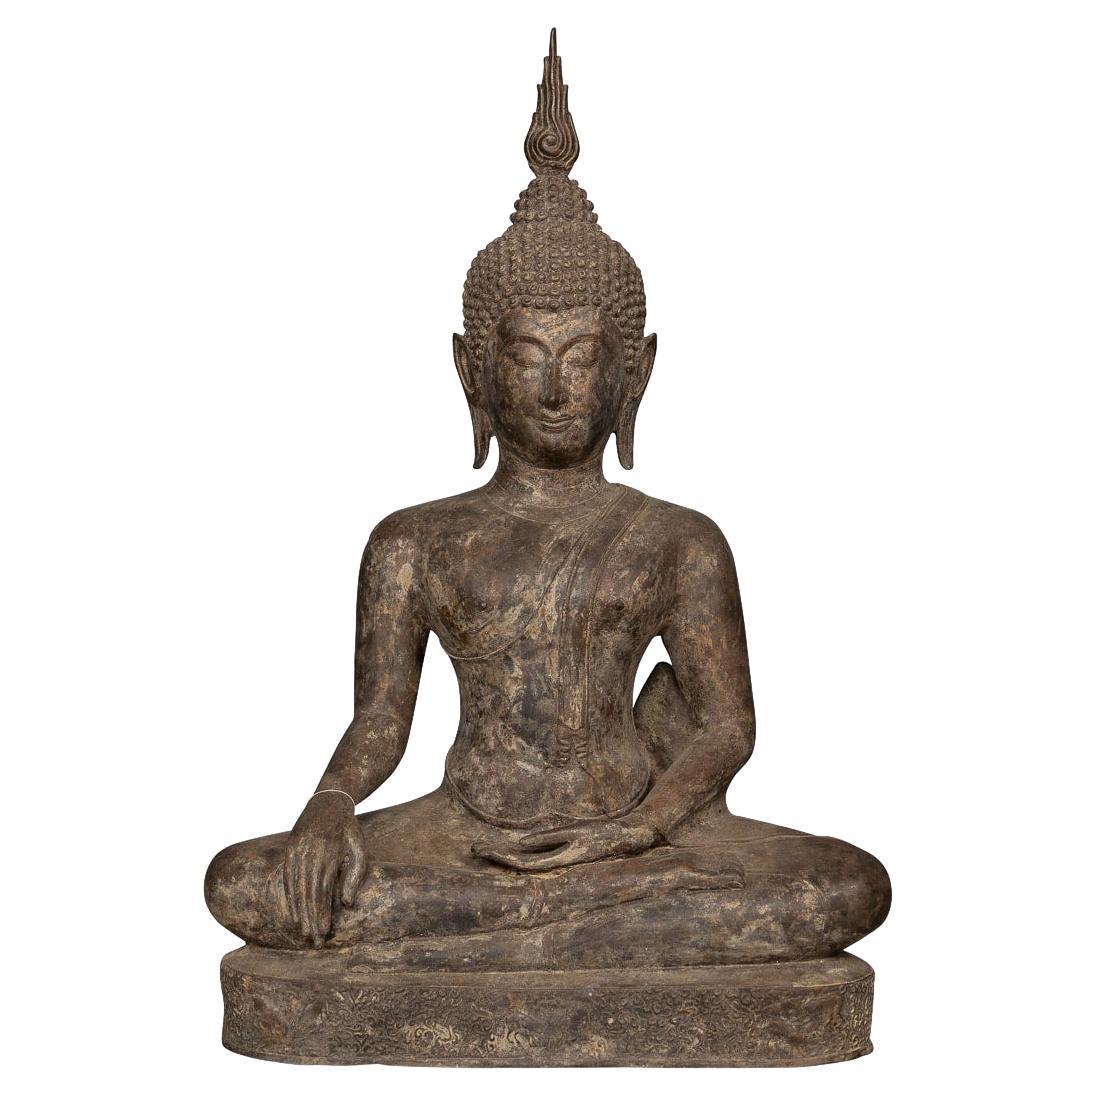 20th Century Metal Cast of a Buddha